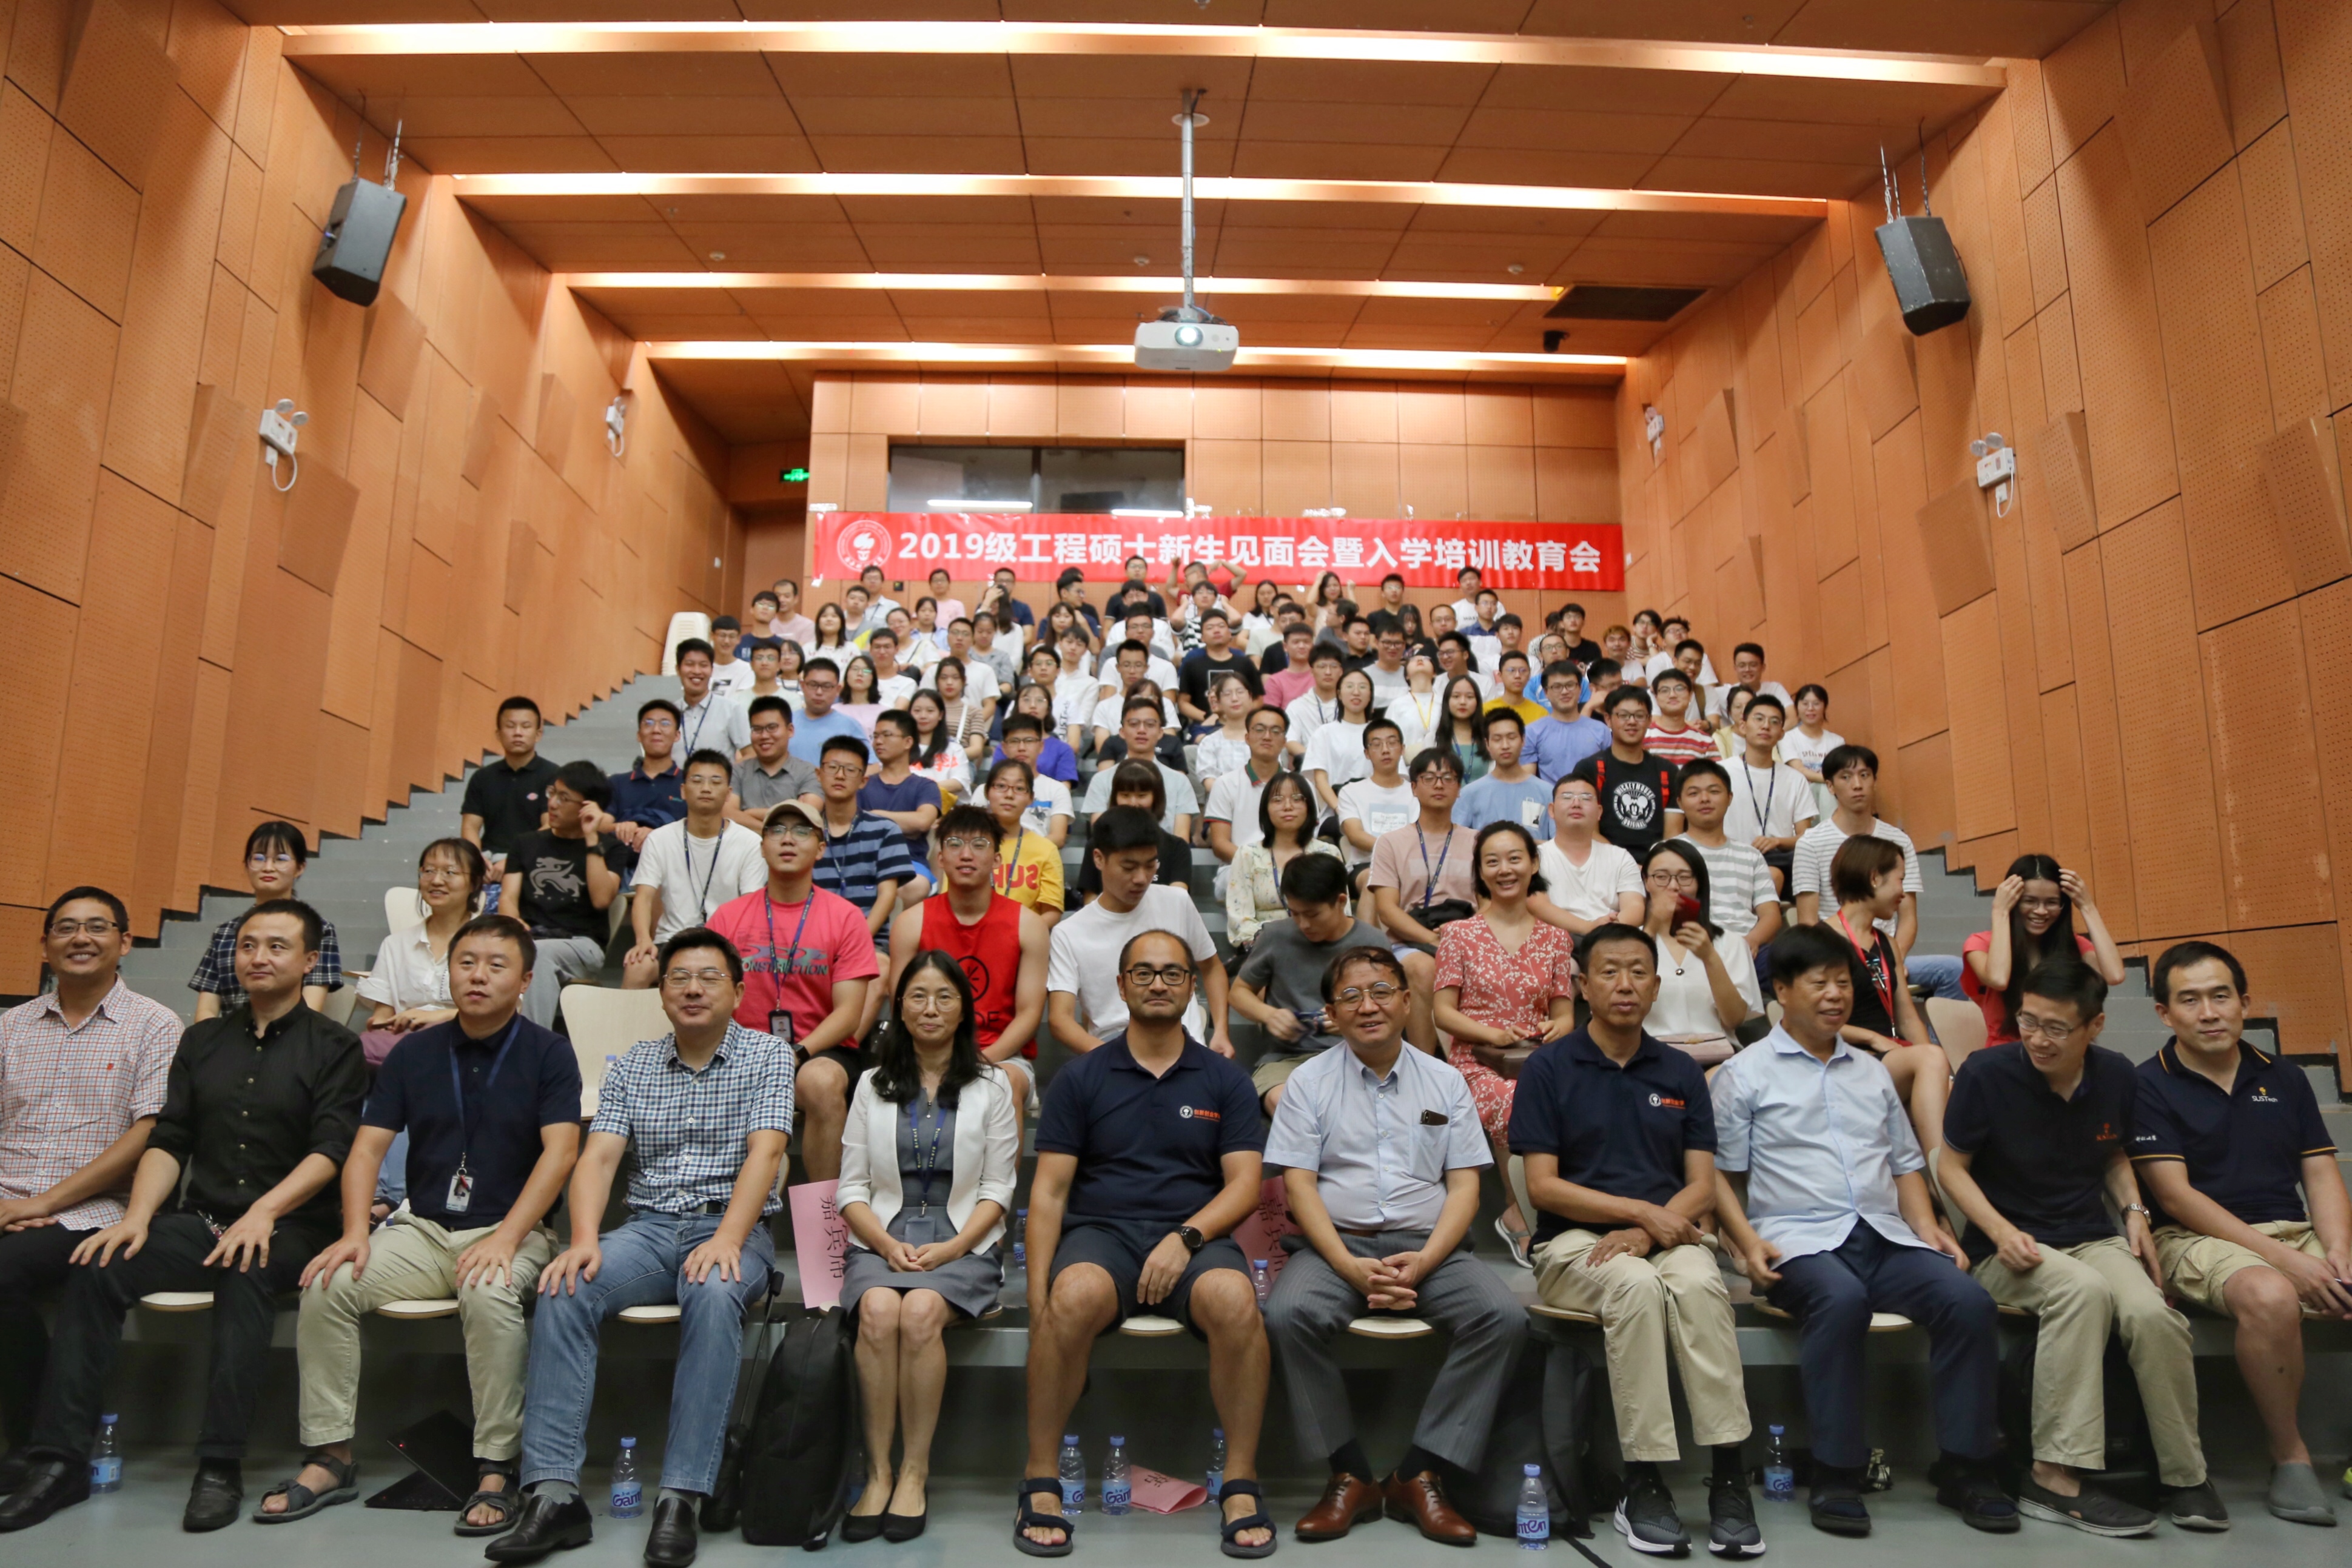 Masters of Engineering freshmen seminar held